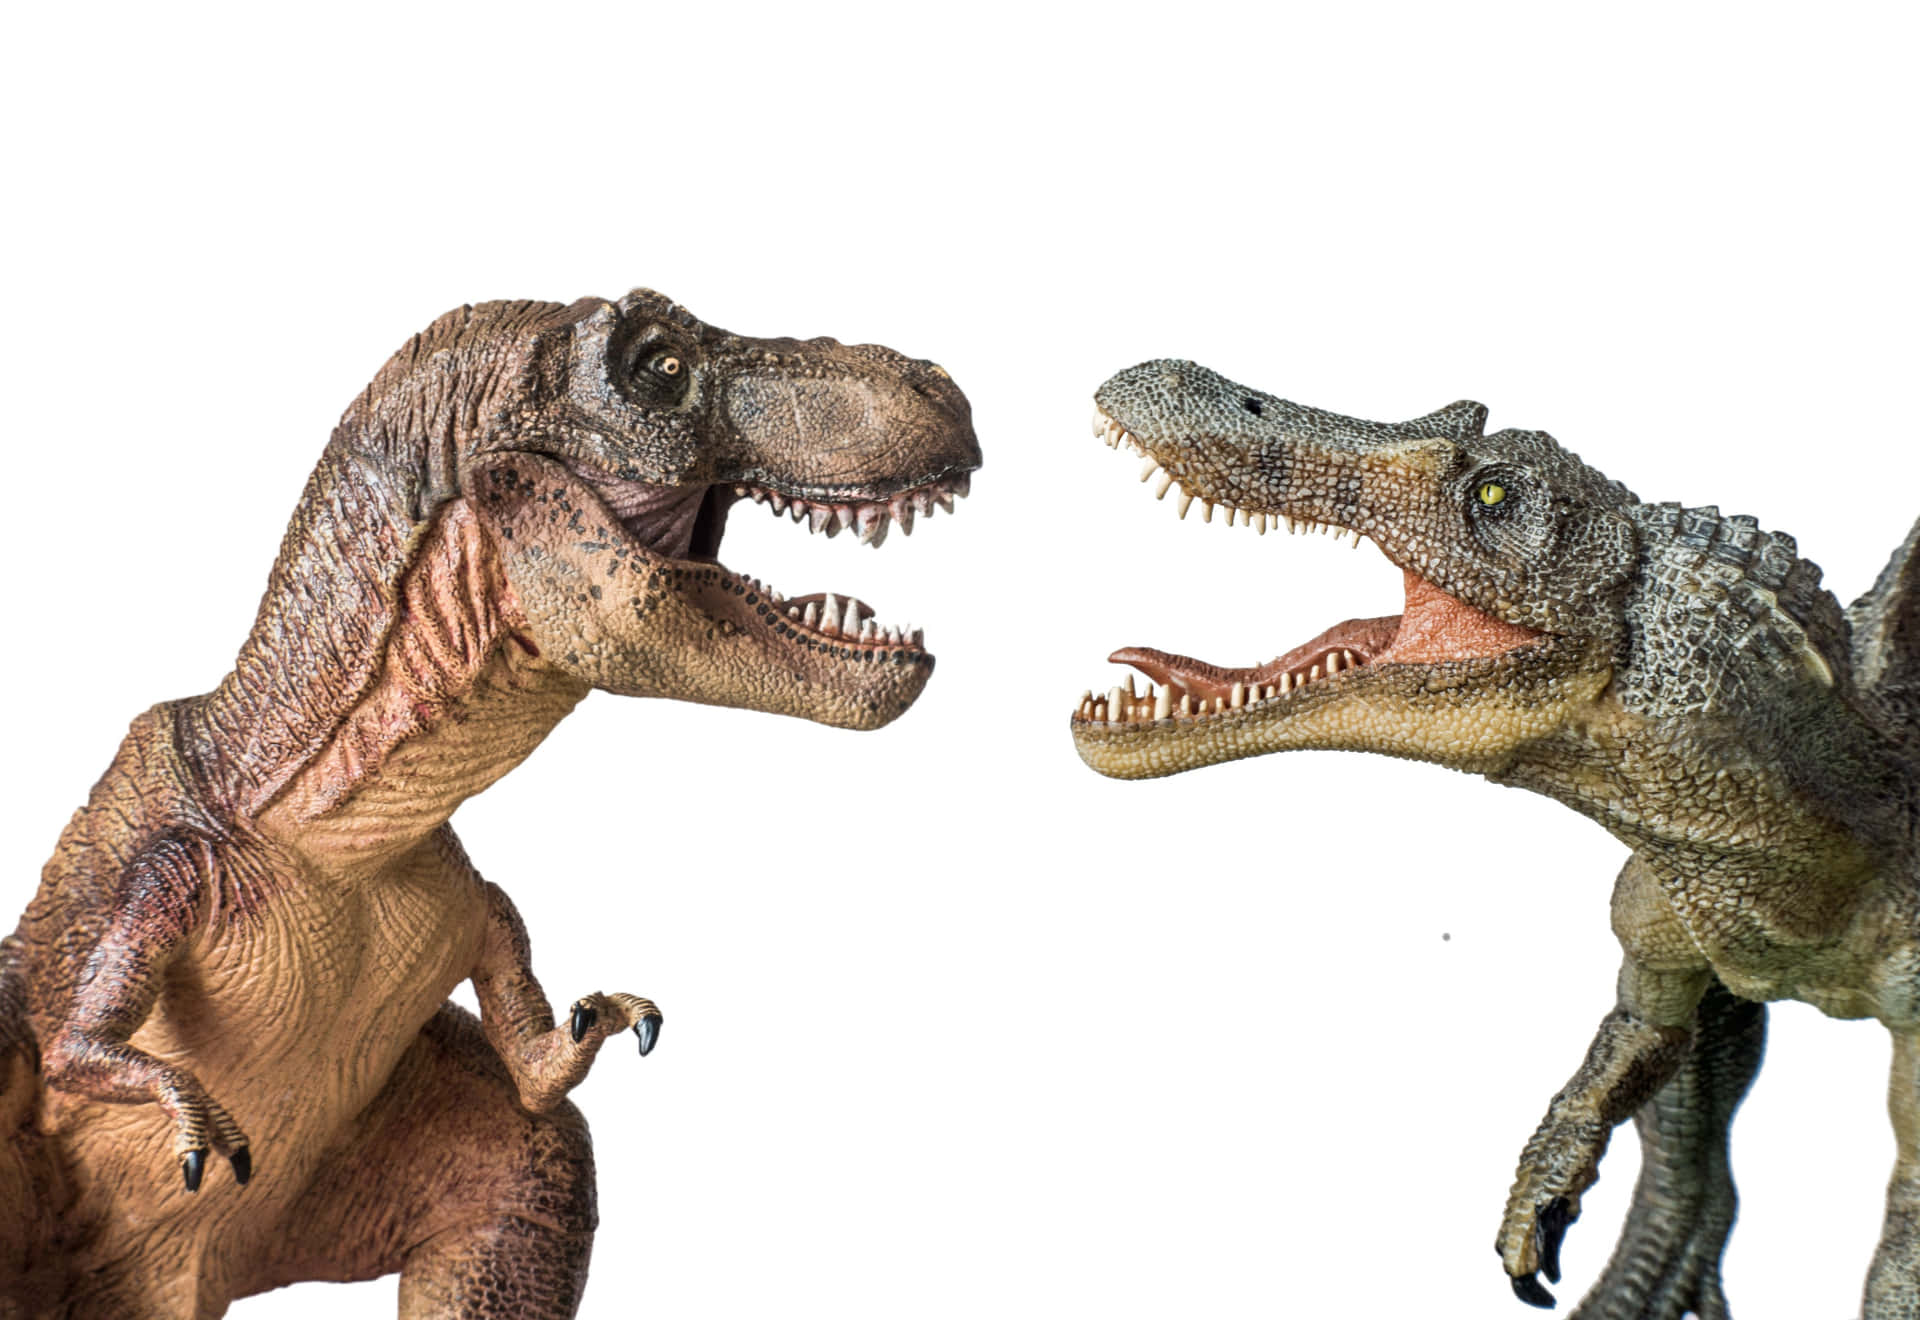 "Ready to Roar: A Tyrannosaurus Rex in Its Natural Habitat"